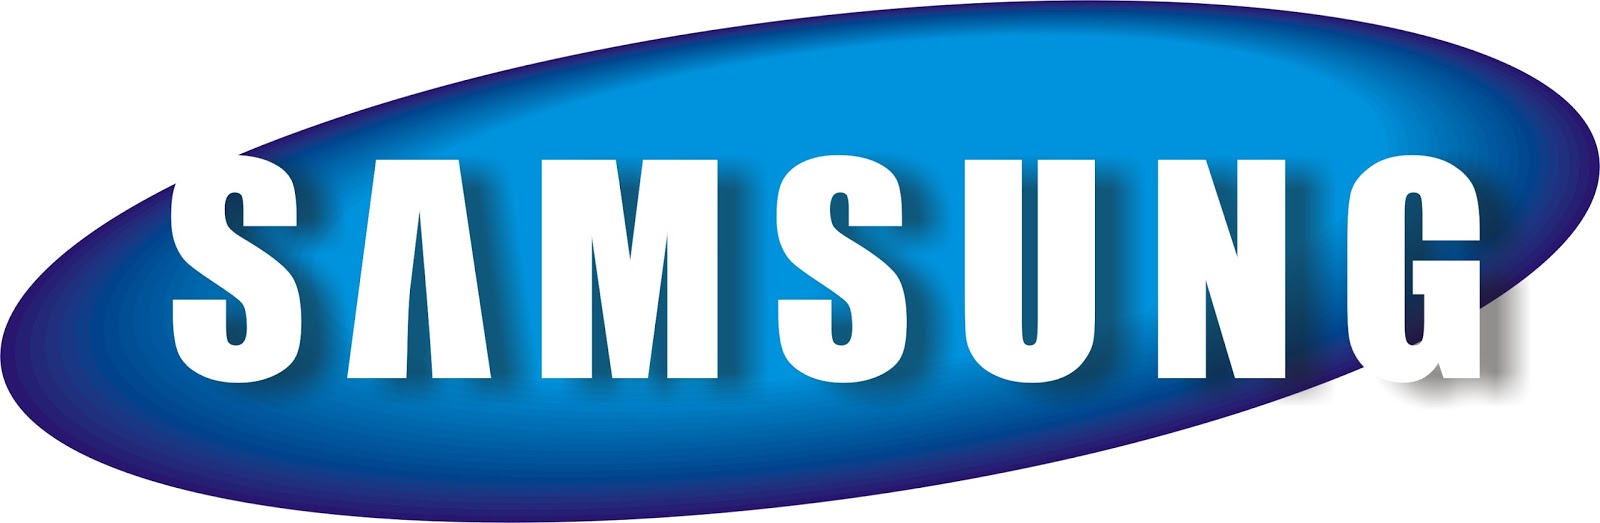 Samsung Mobile Phone Transpar